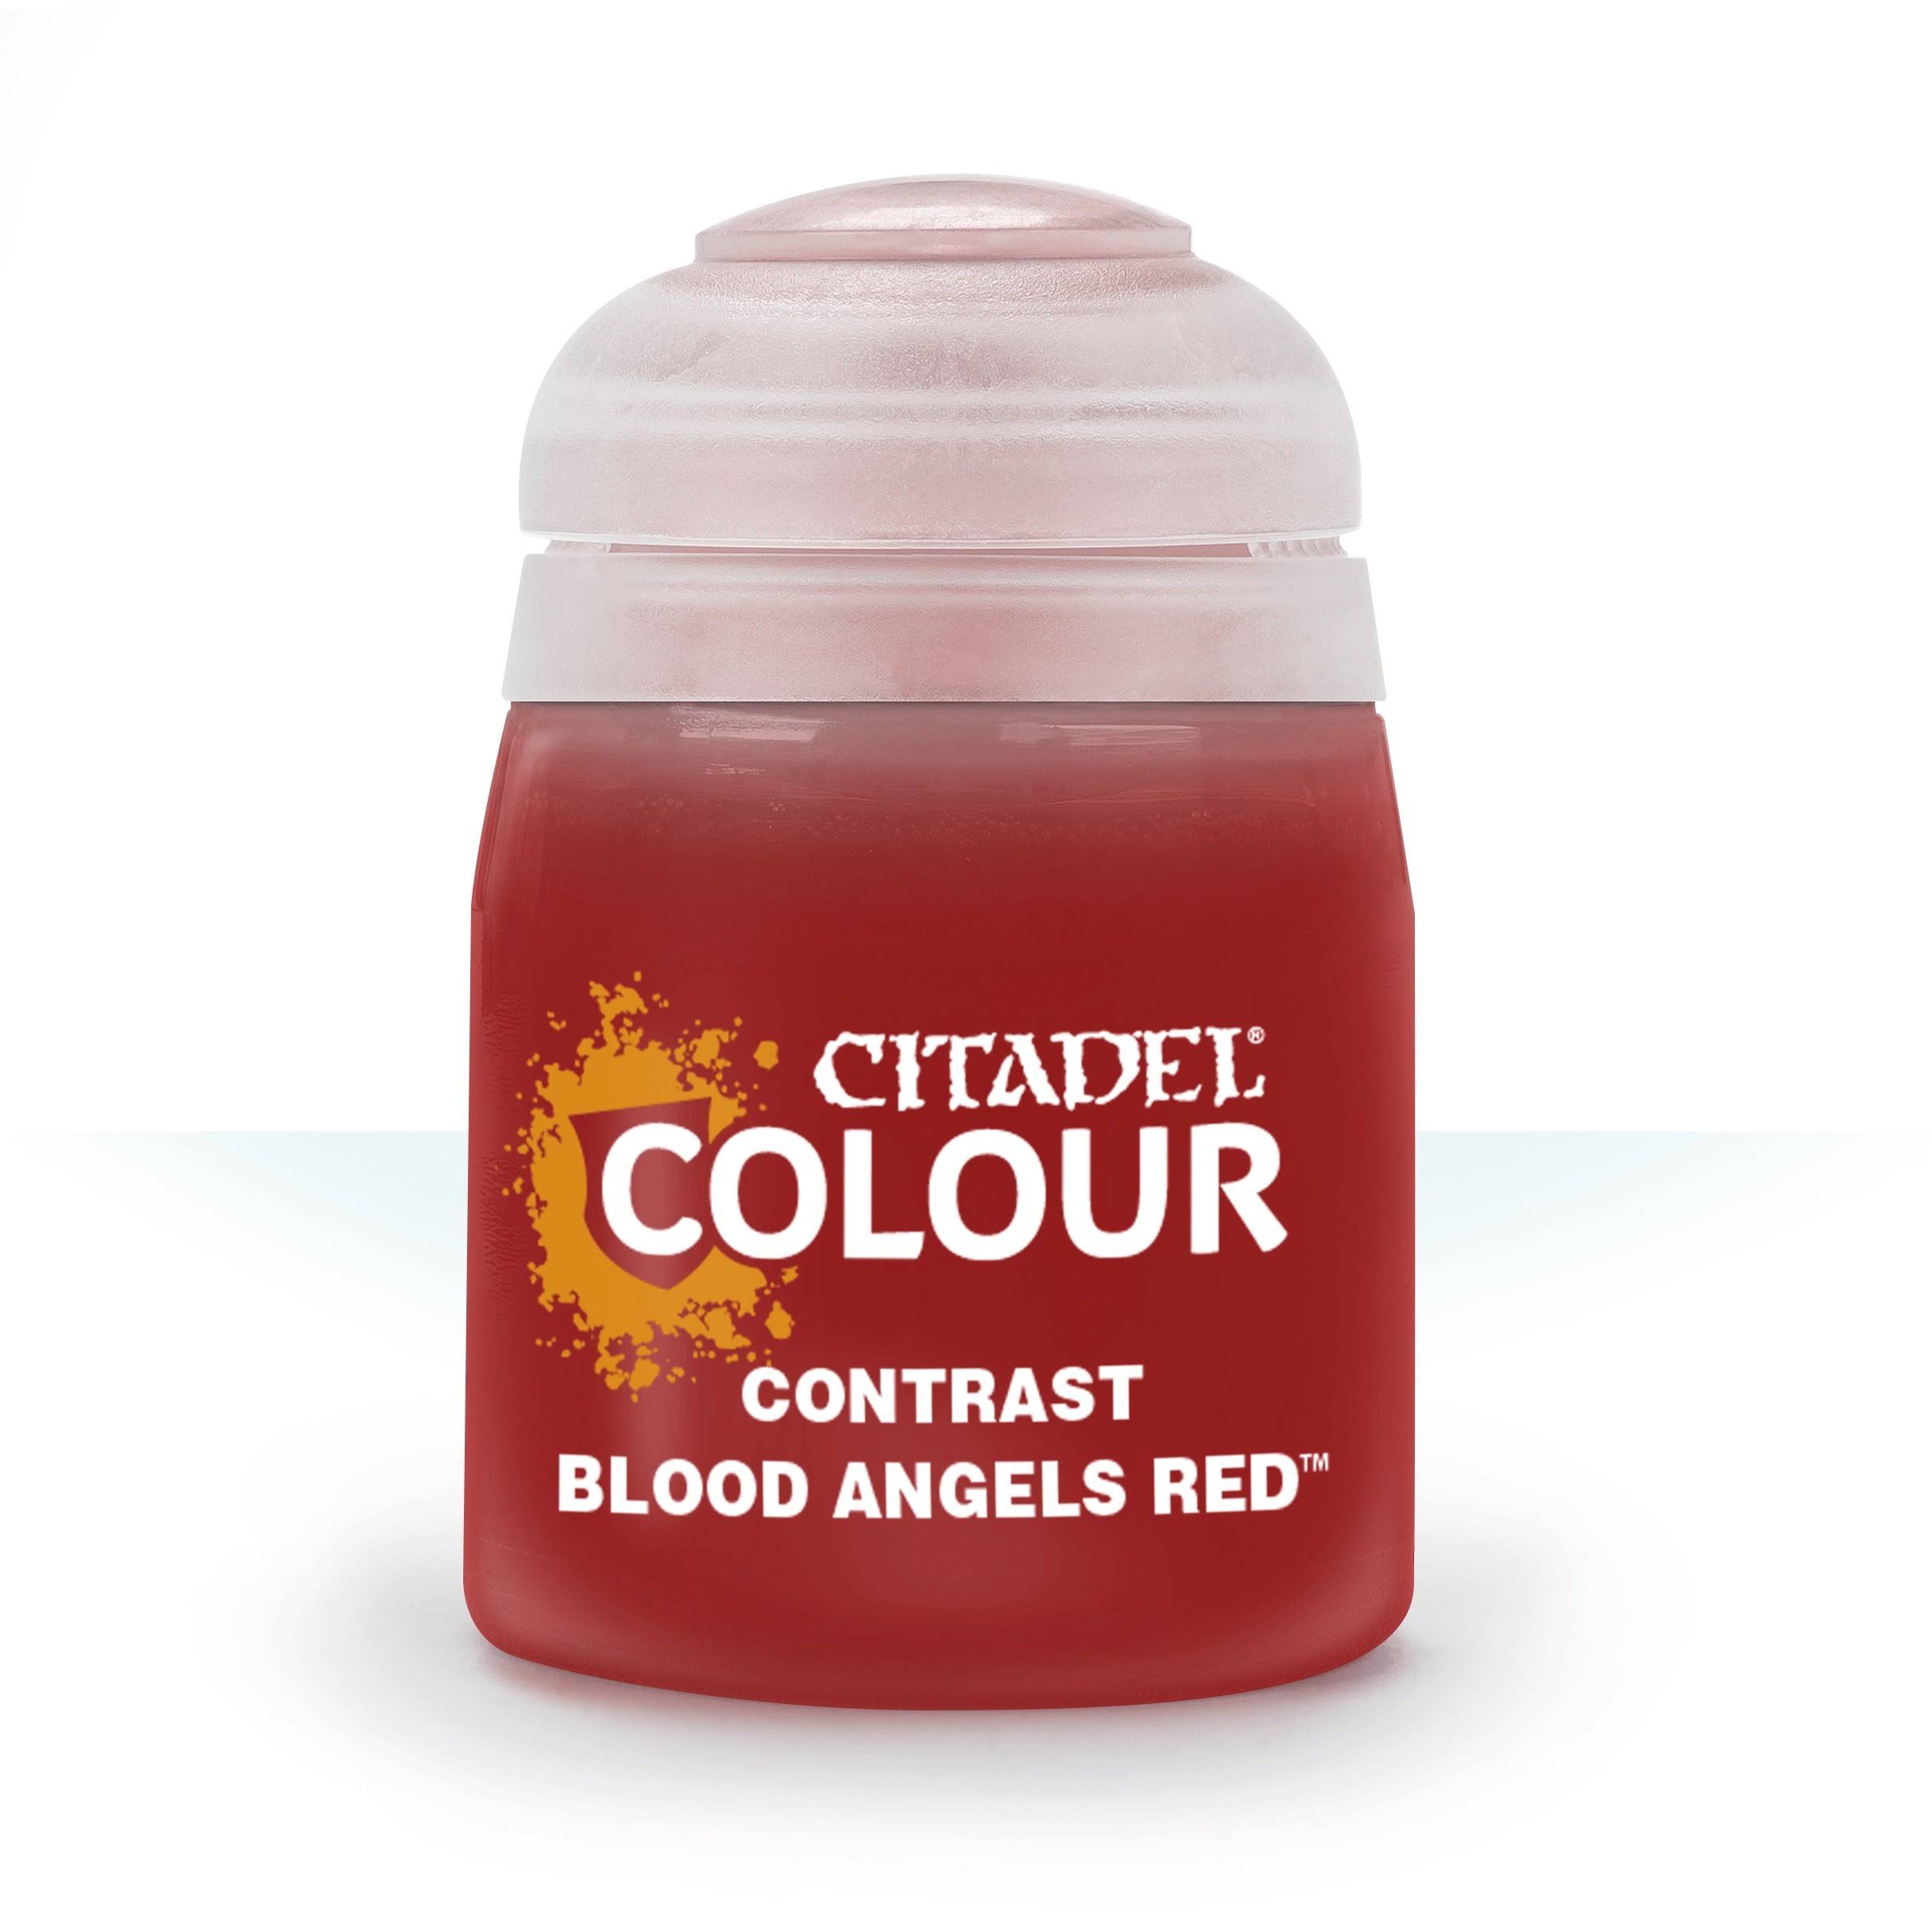 Citadel - Blood Angels Red (contrast)